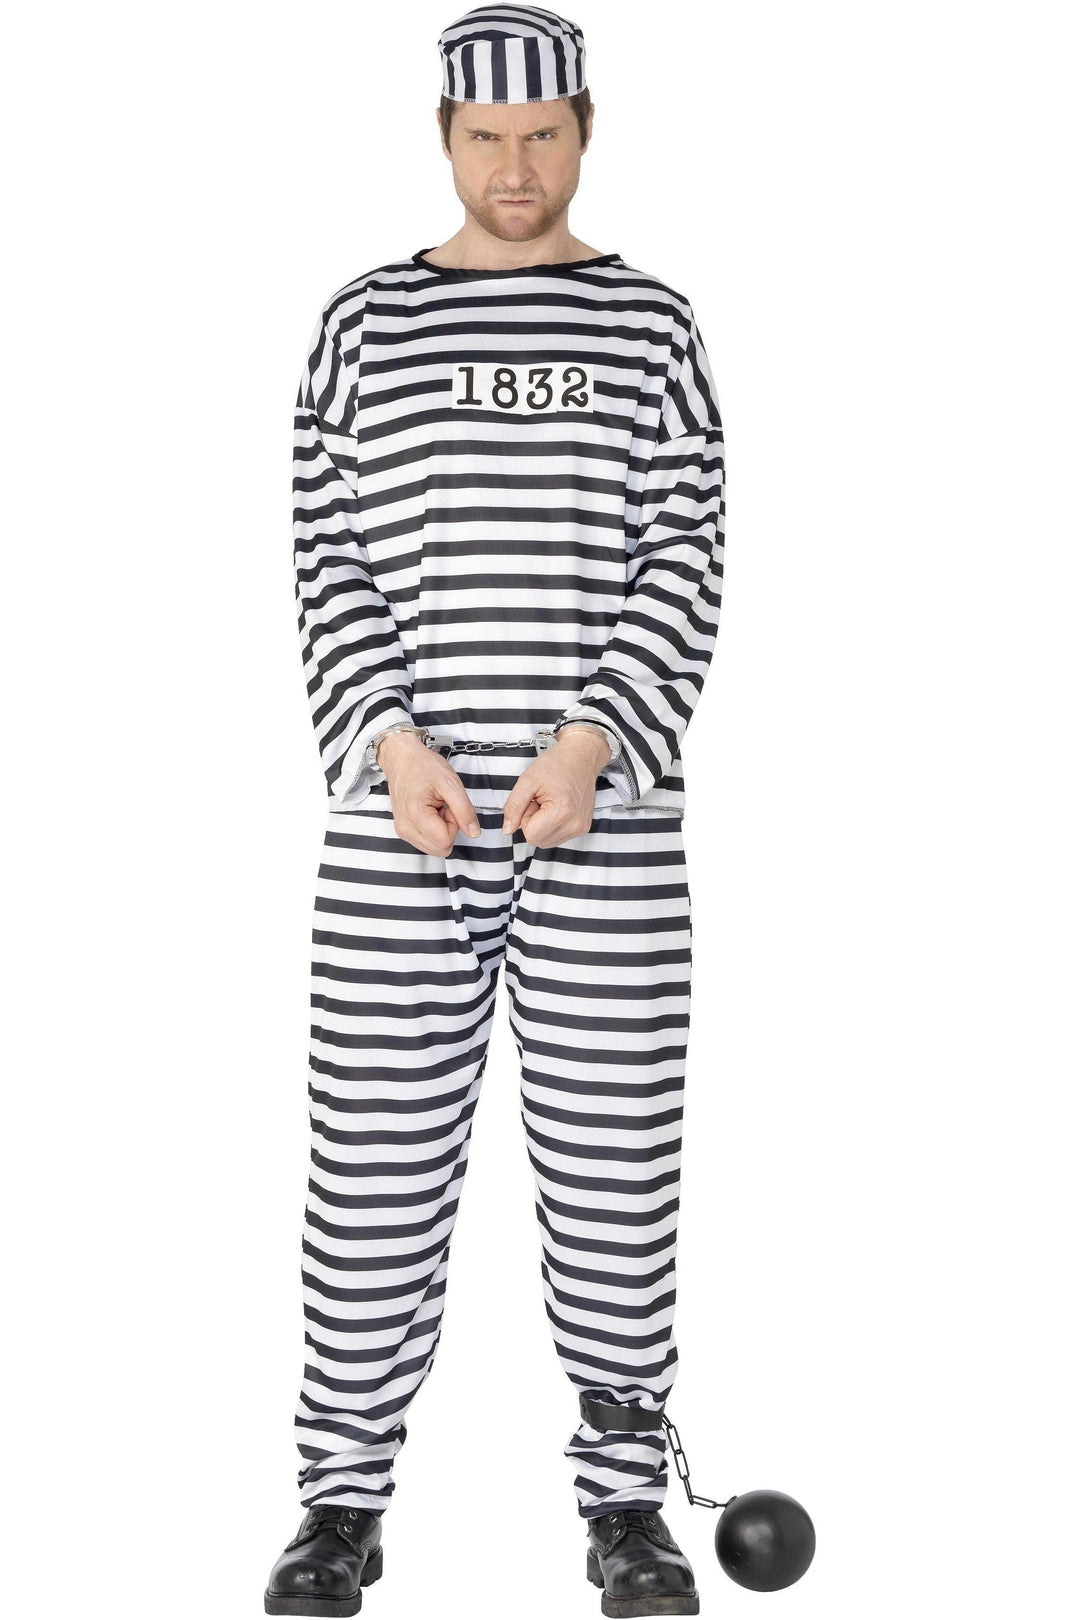 Convict Costume